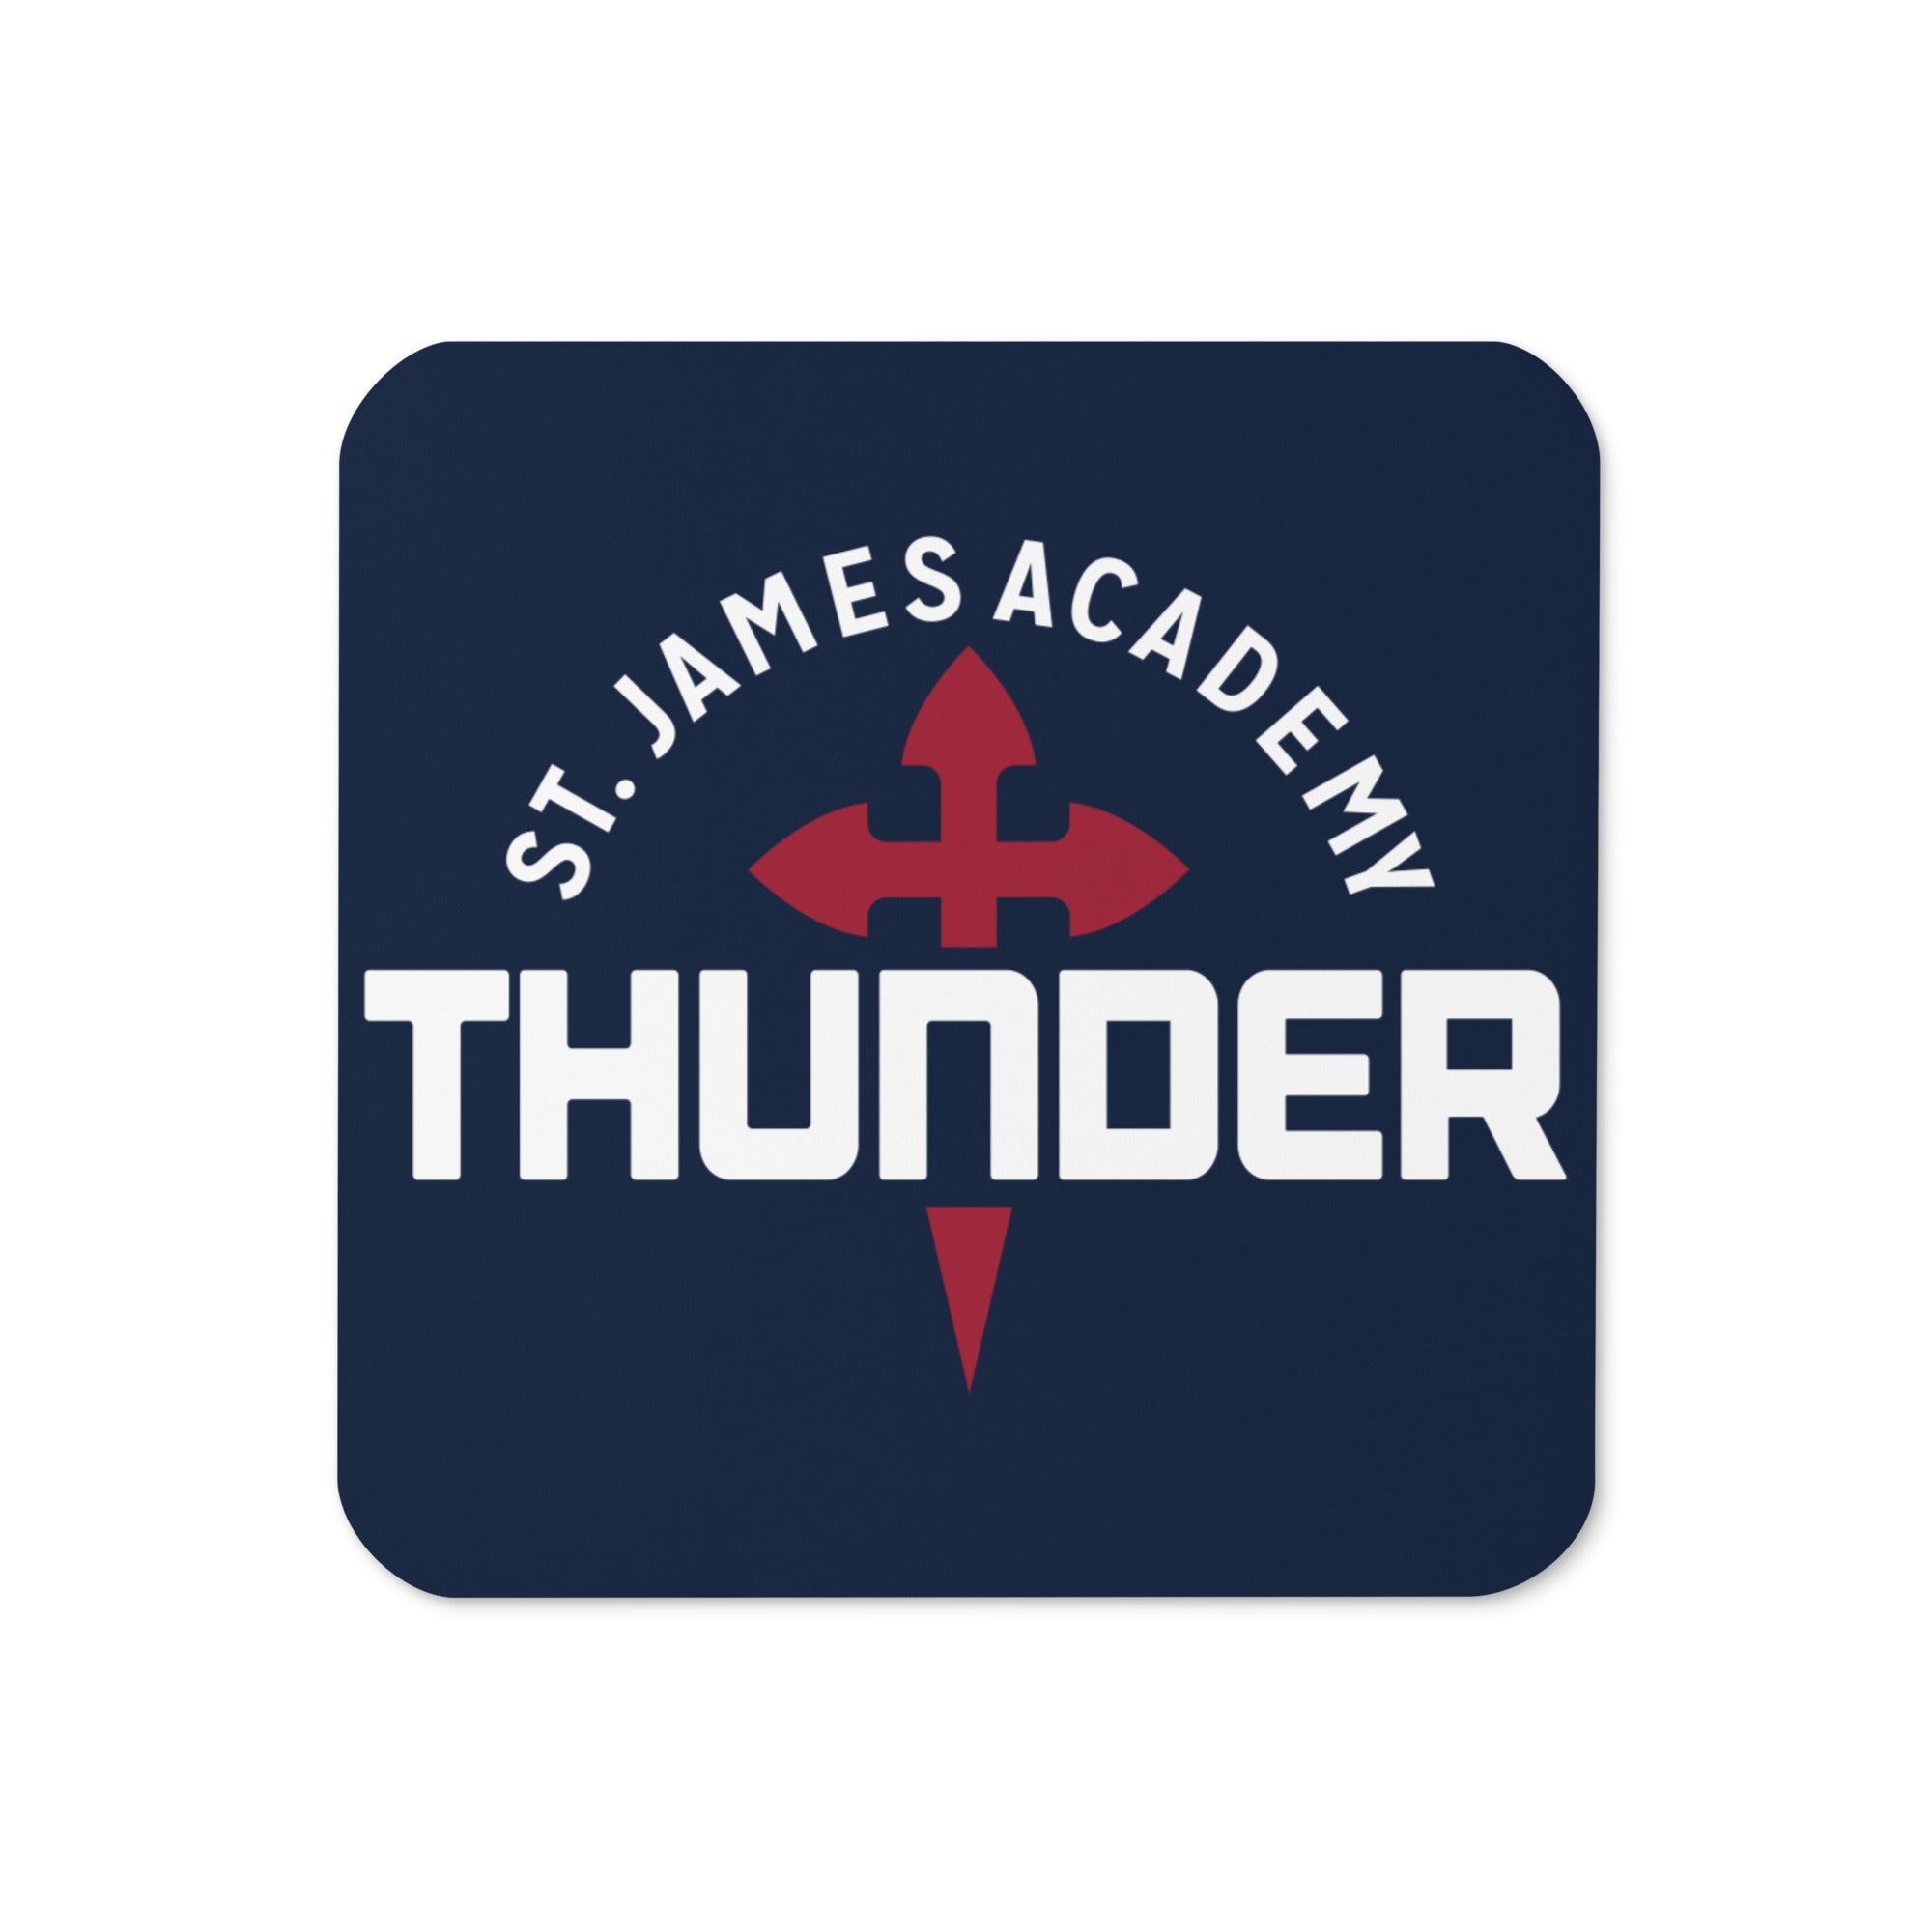 St. James Academy Thunder Cork Back Coaster